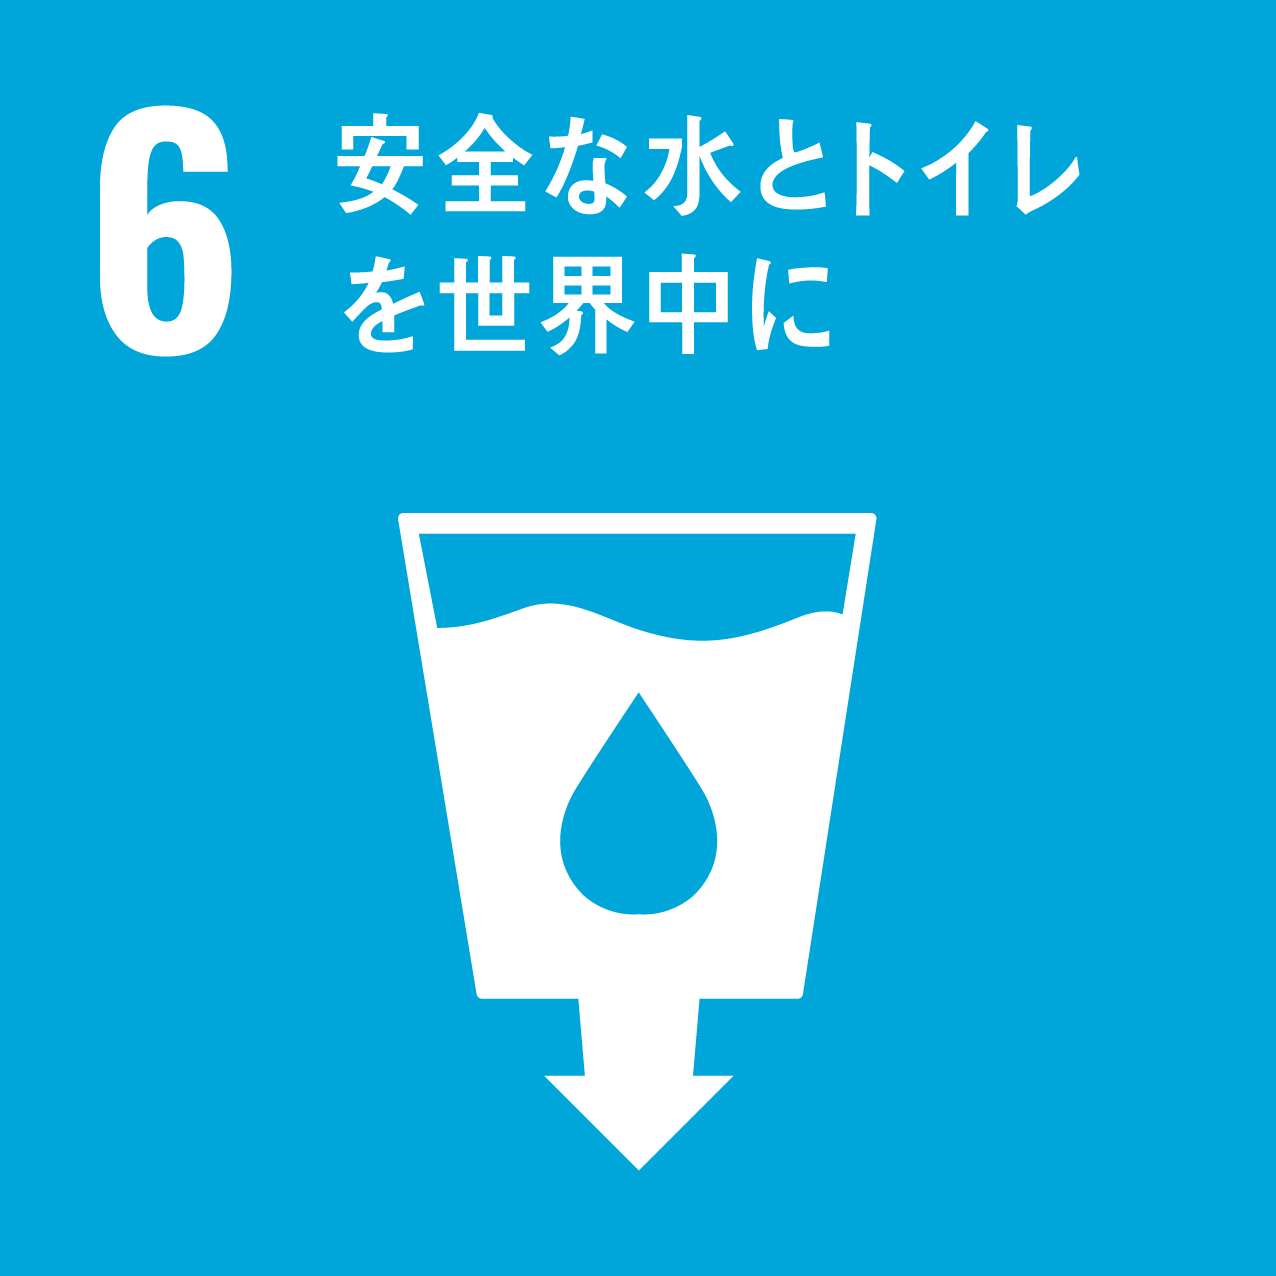 Sdgs解説 目標 6 すべての人々の水と衛生の利用可能性と持続可能な管理を確保する 国際平和拠点ひろしま 核兵器のない世界平和に向けて